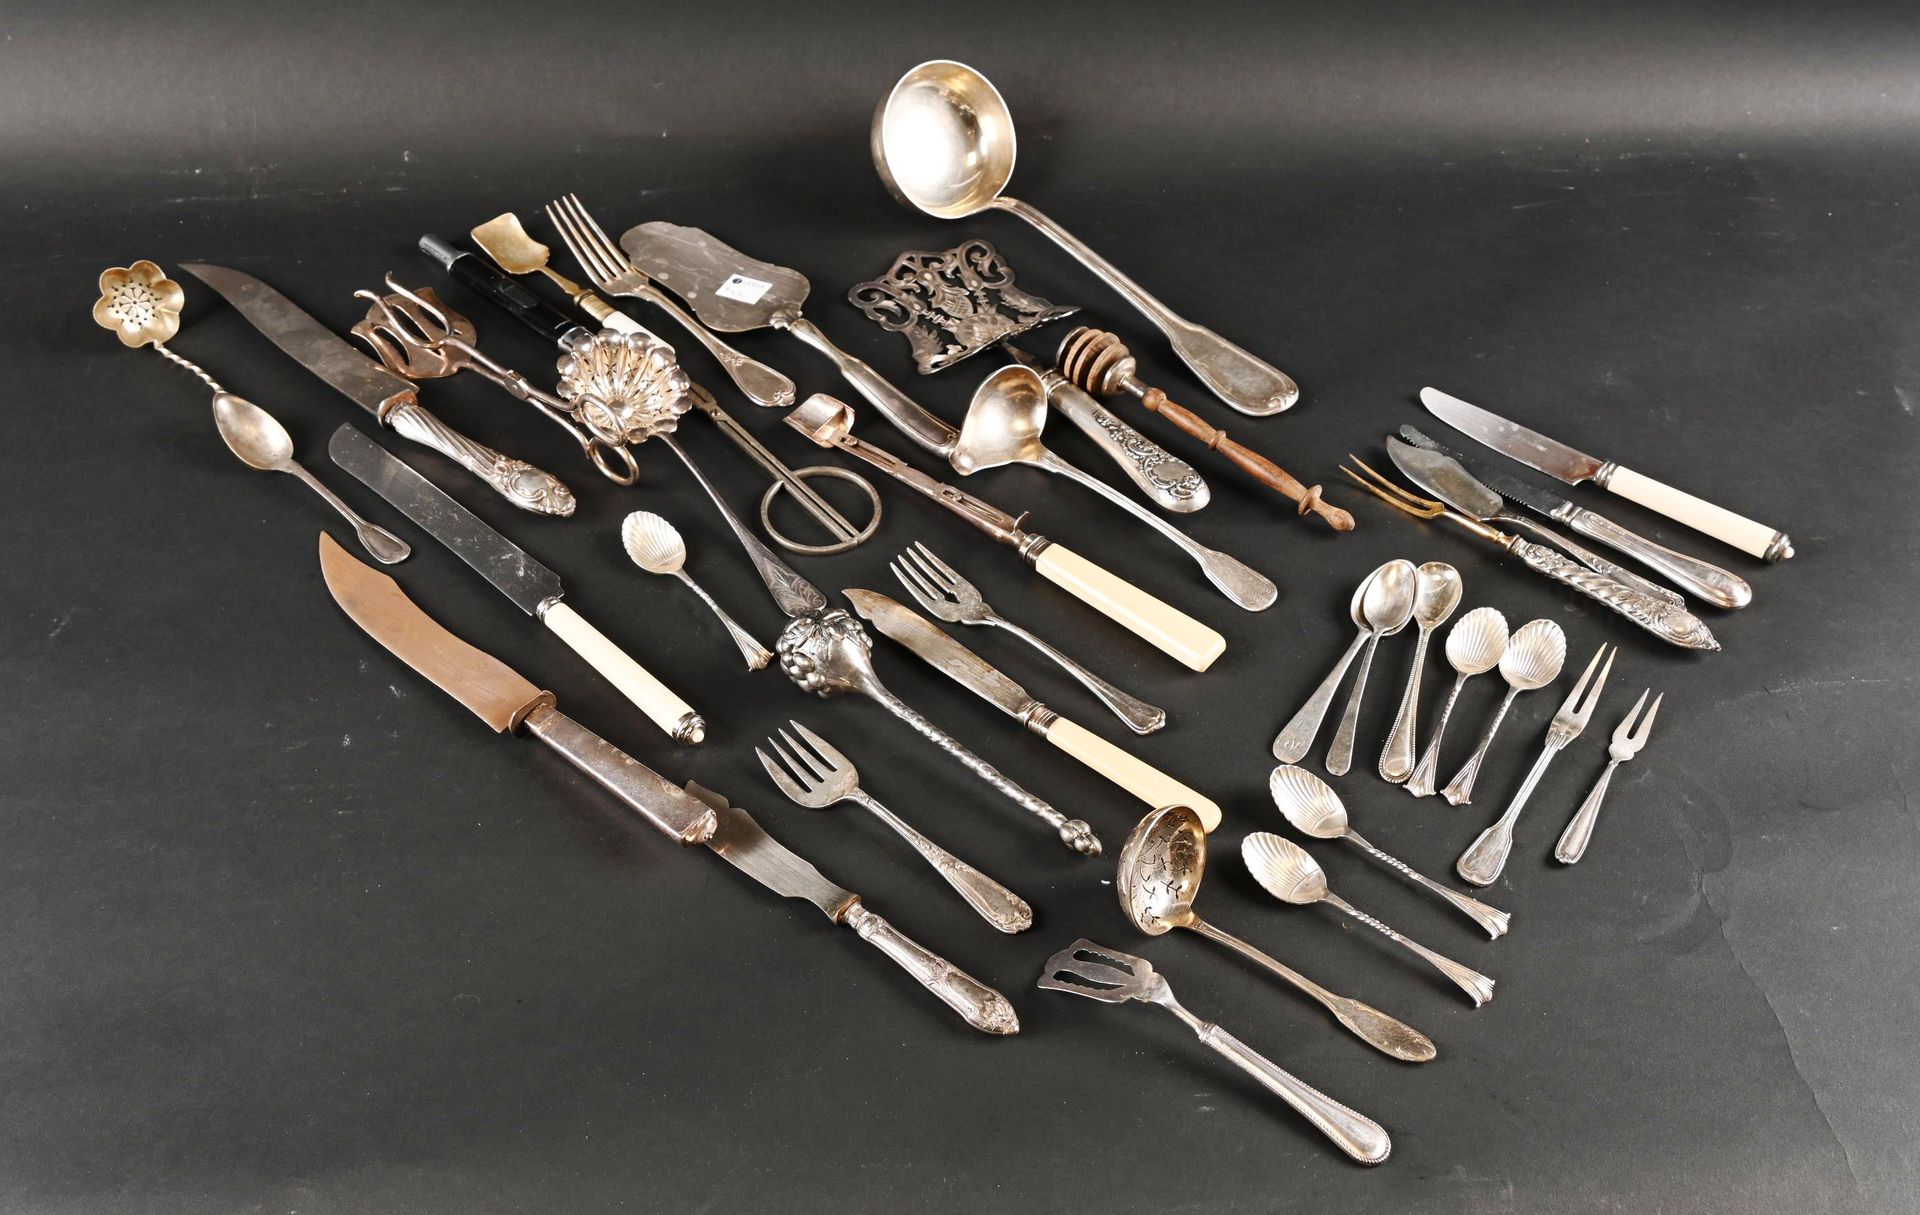 Fond de tiroir Bottom of drawer composed of silver plated serving utensils.

Kni&hellip;